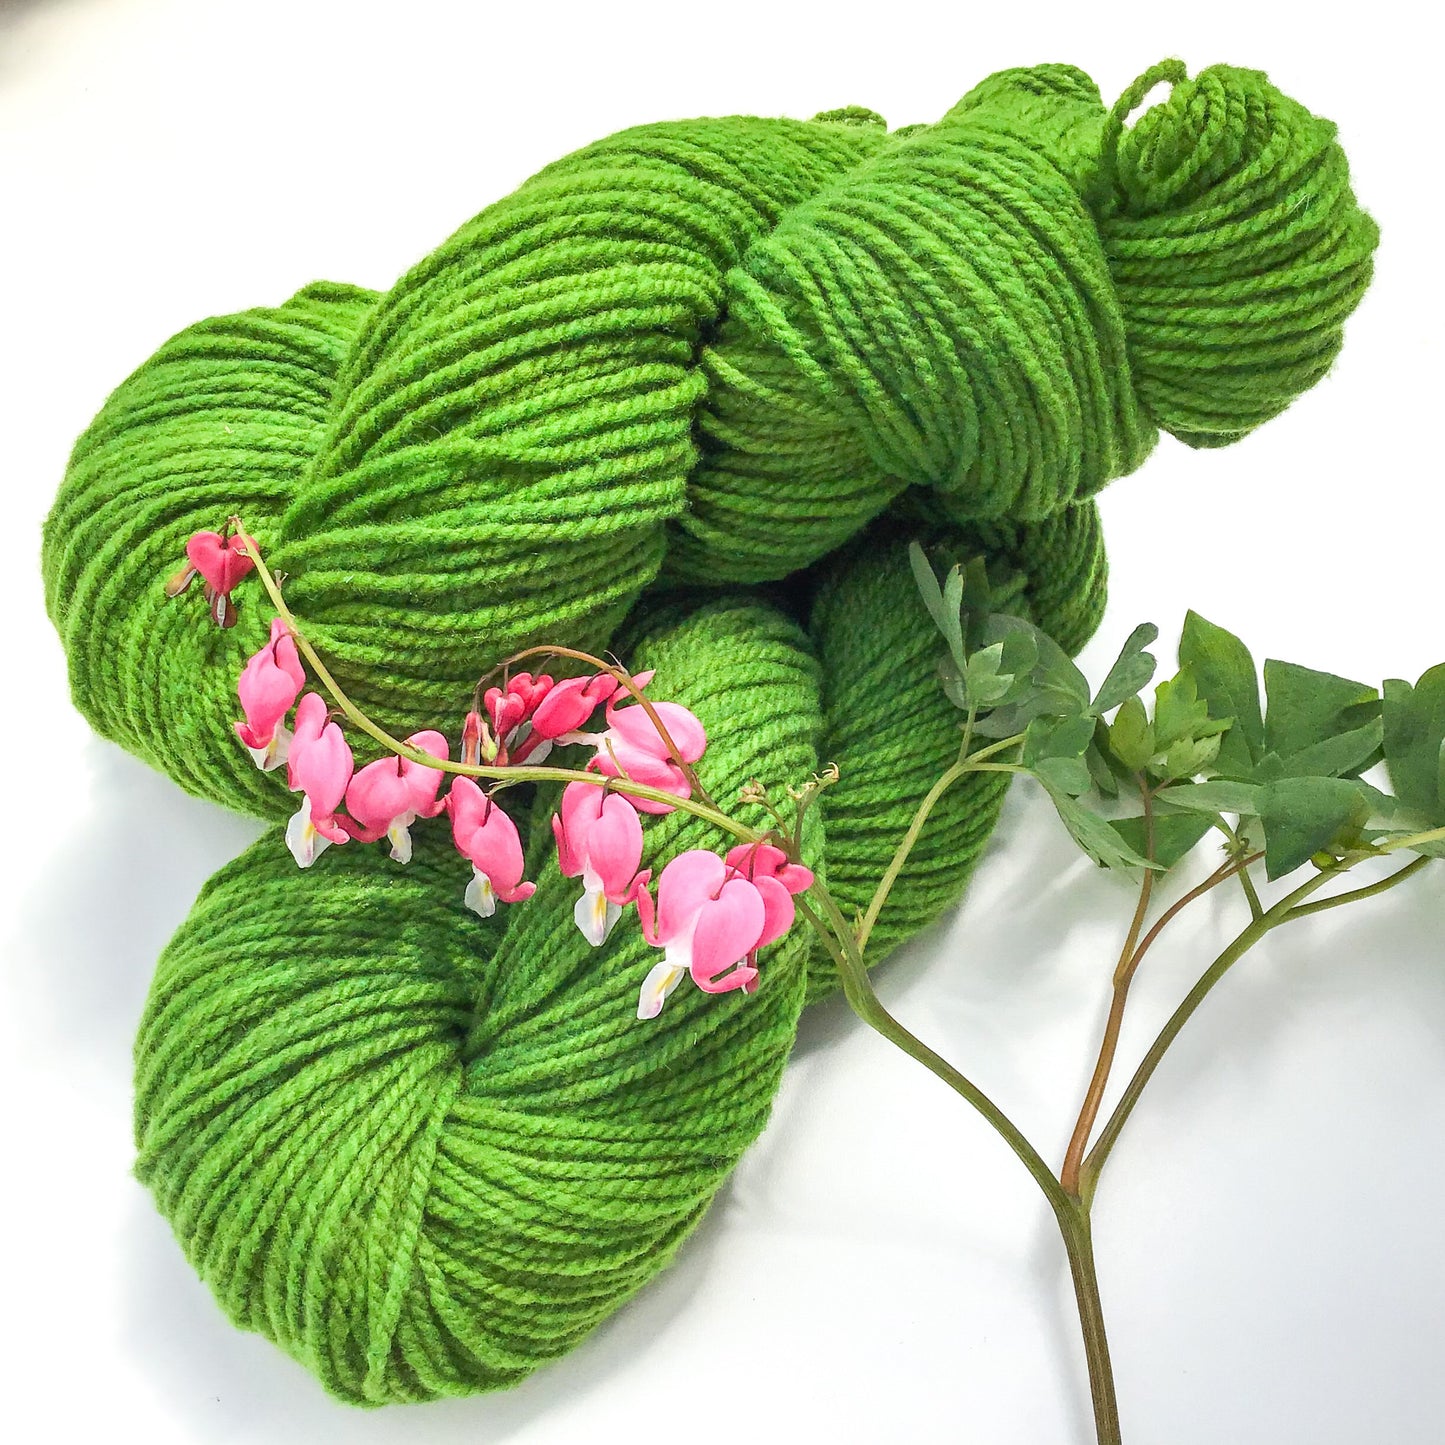 Hand-dyed Moorit Merino Yarn - DK - Light Worsted Weight - Tomato Leaf Green